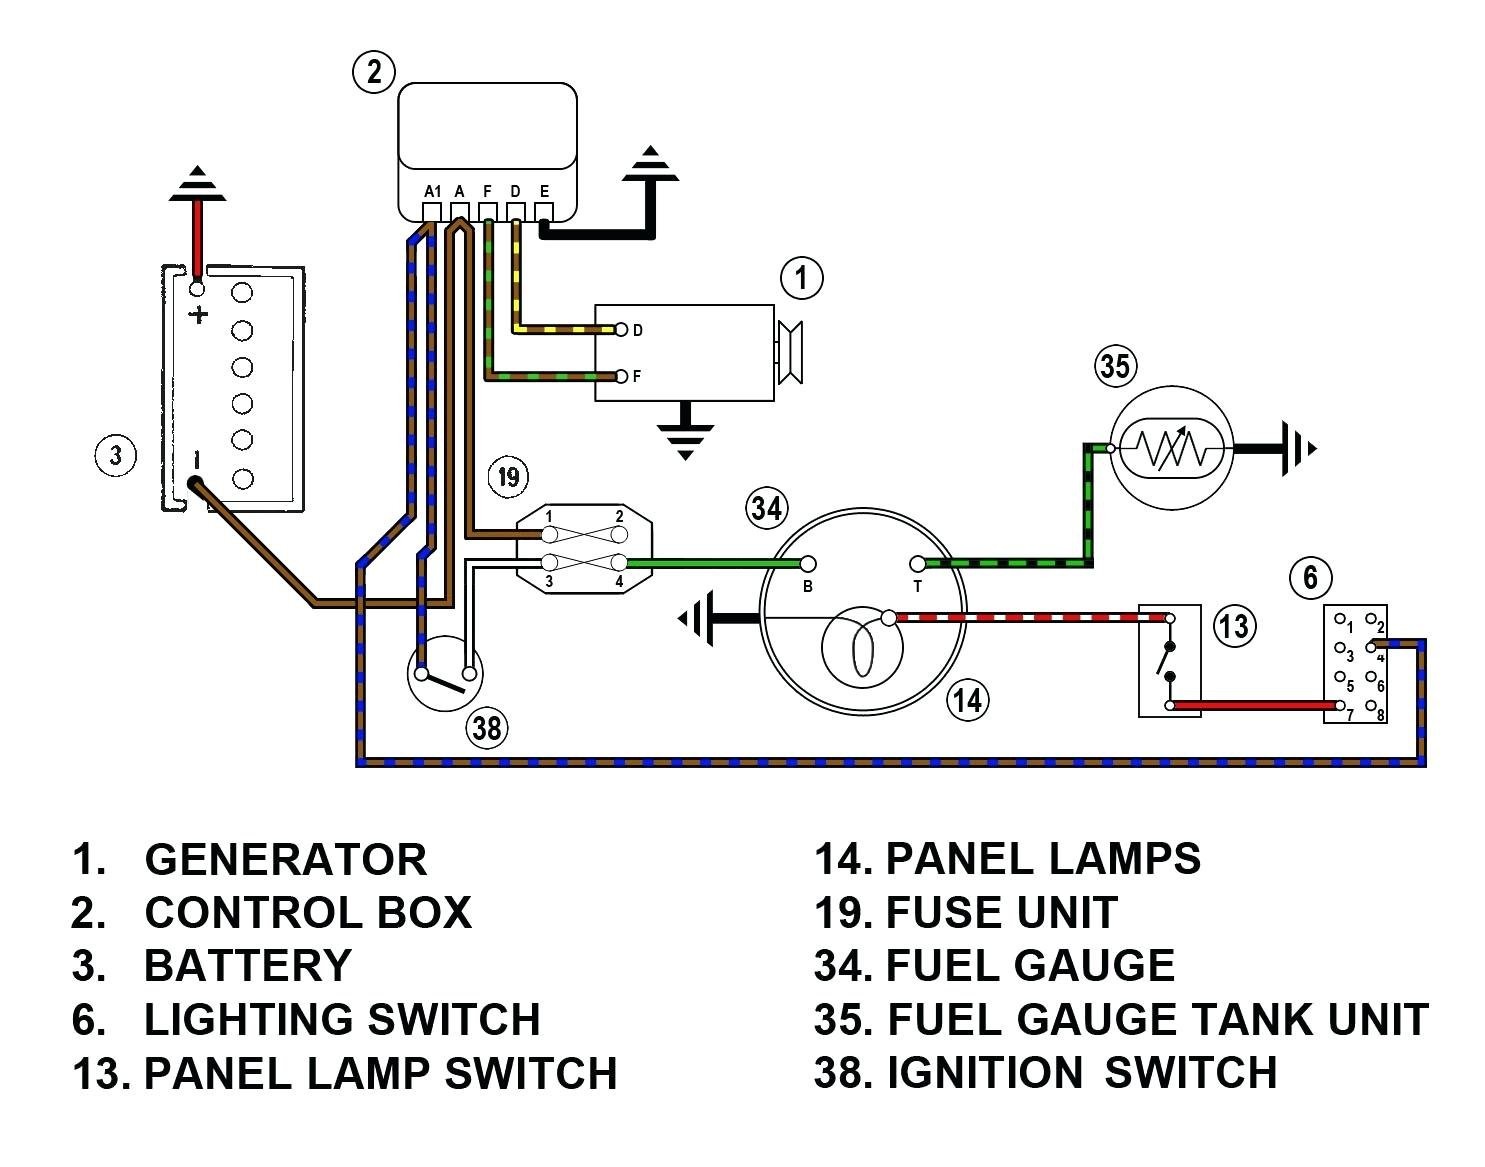 Circuit Diagram Generator Unique Electrical Panel Wiring Diagram software Fuel Gauge Aem Air 3 Way